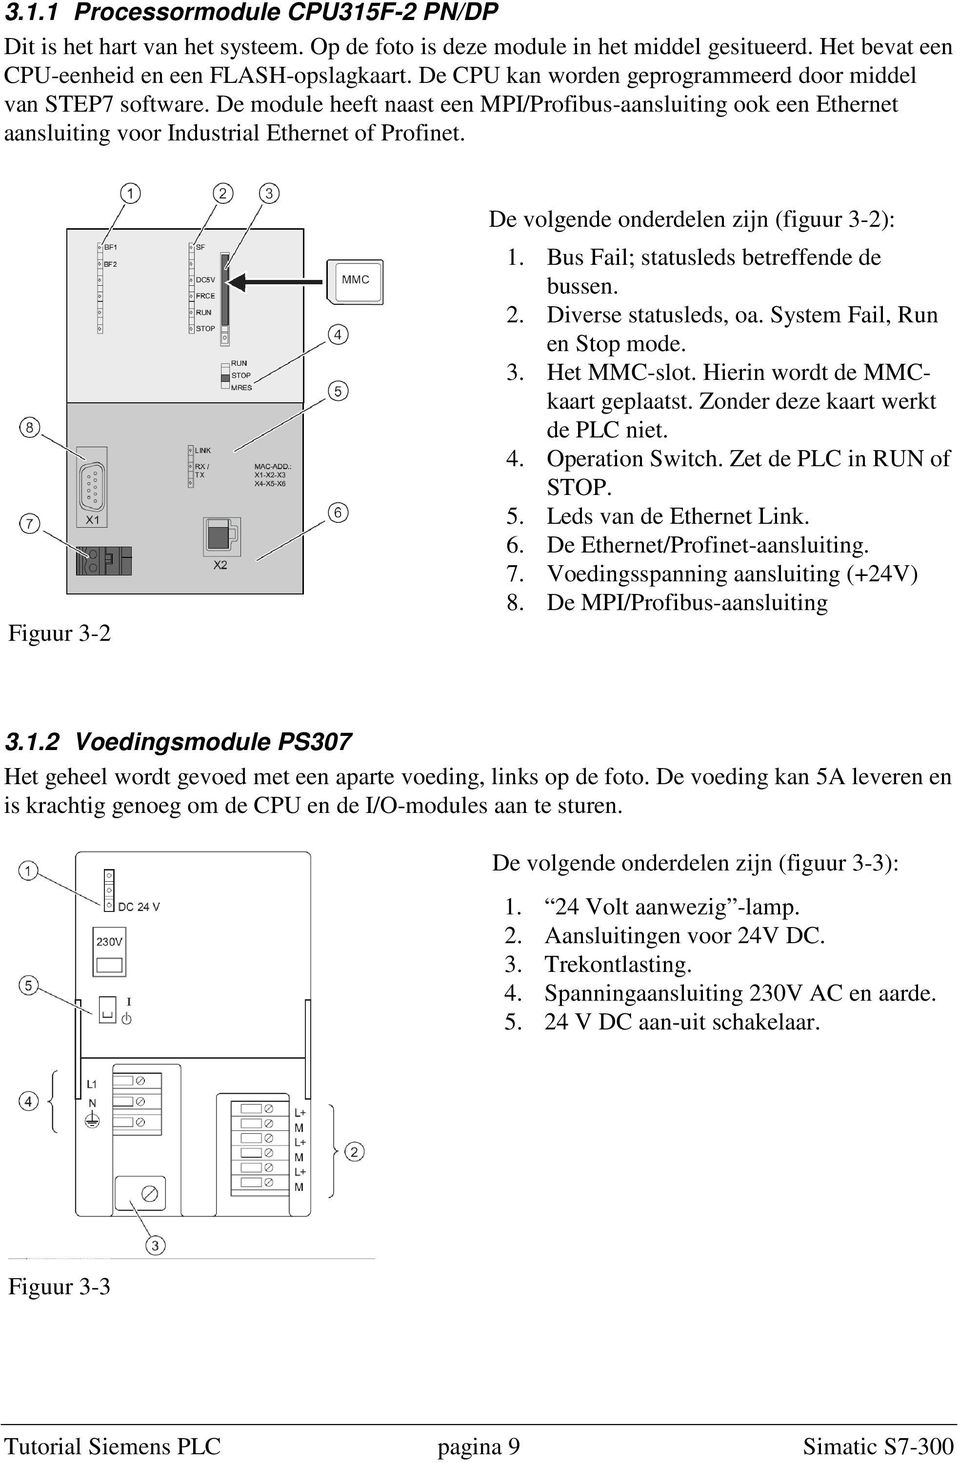 siemens plc tutorial pdf